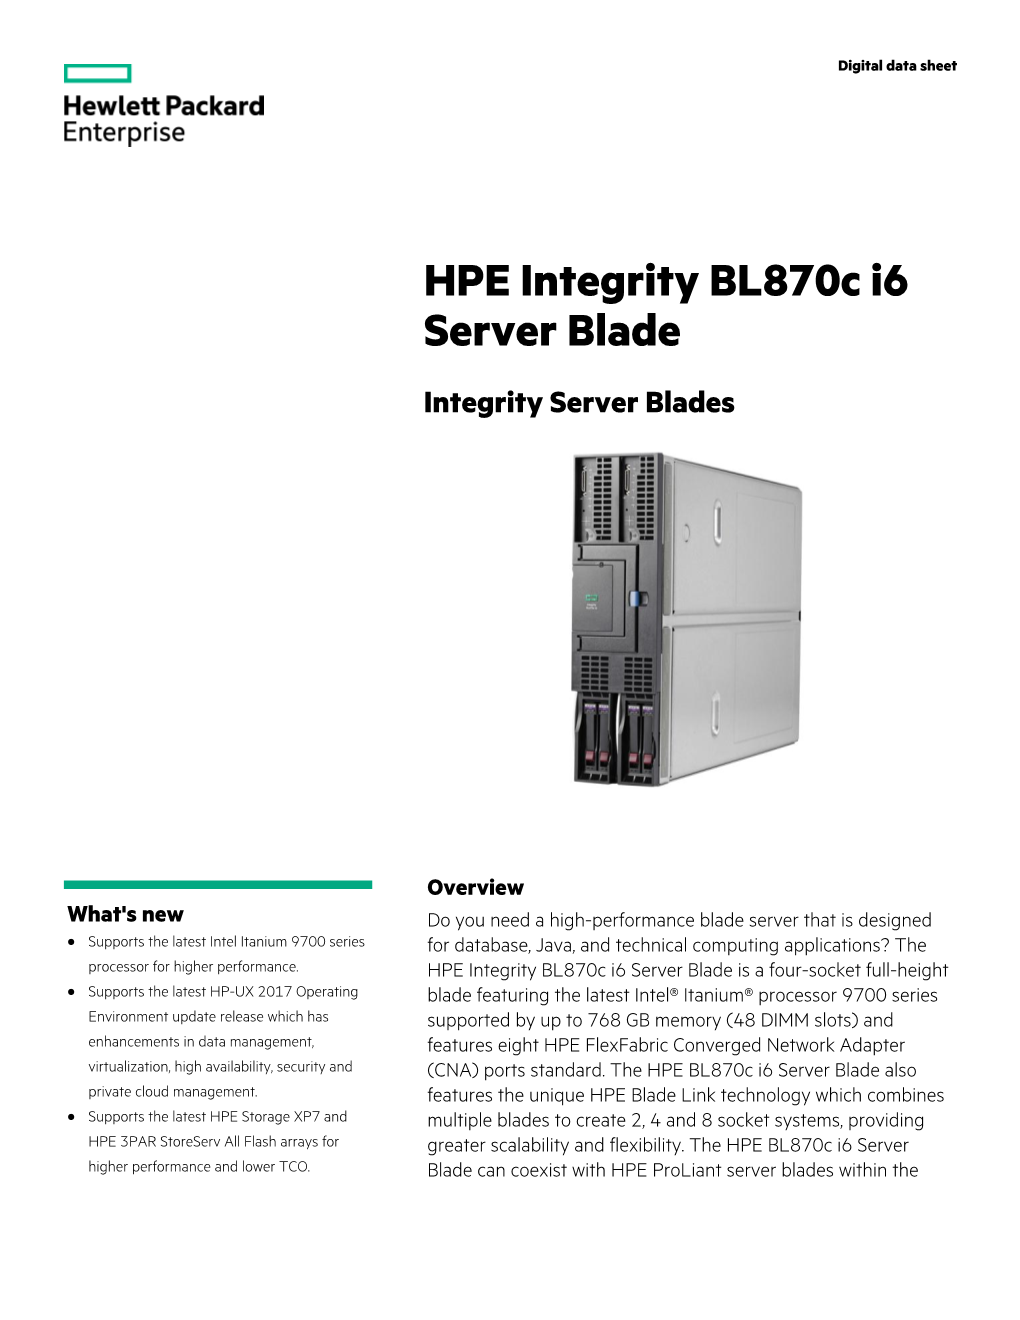 HPE Integrity Bl870c I6 Server Blade Digital Data Sheet